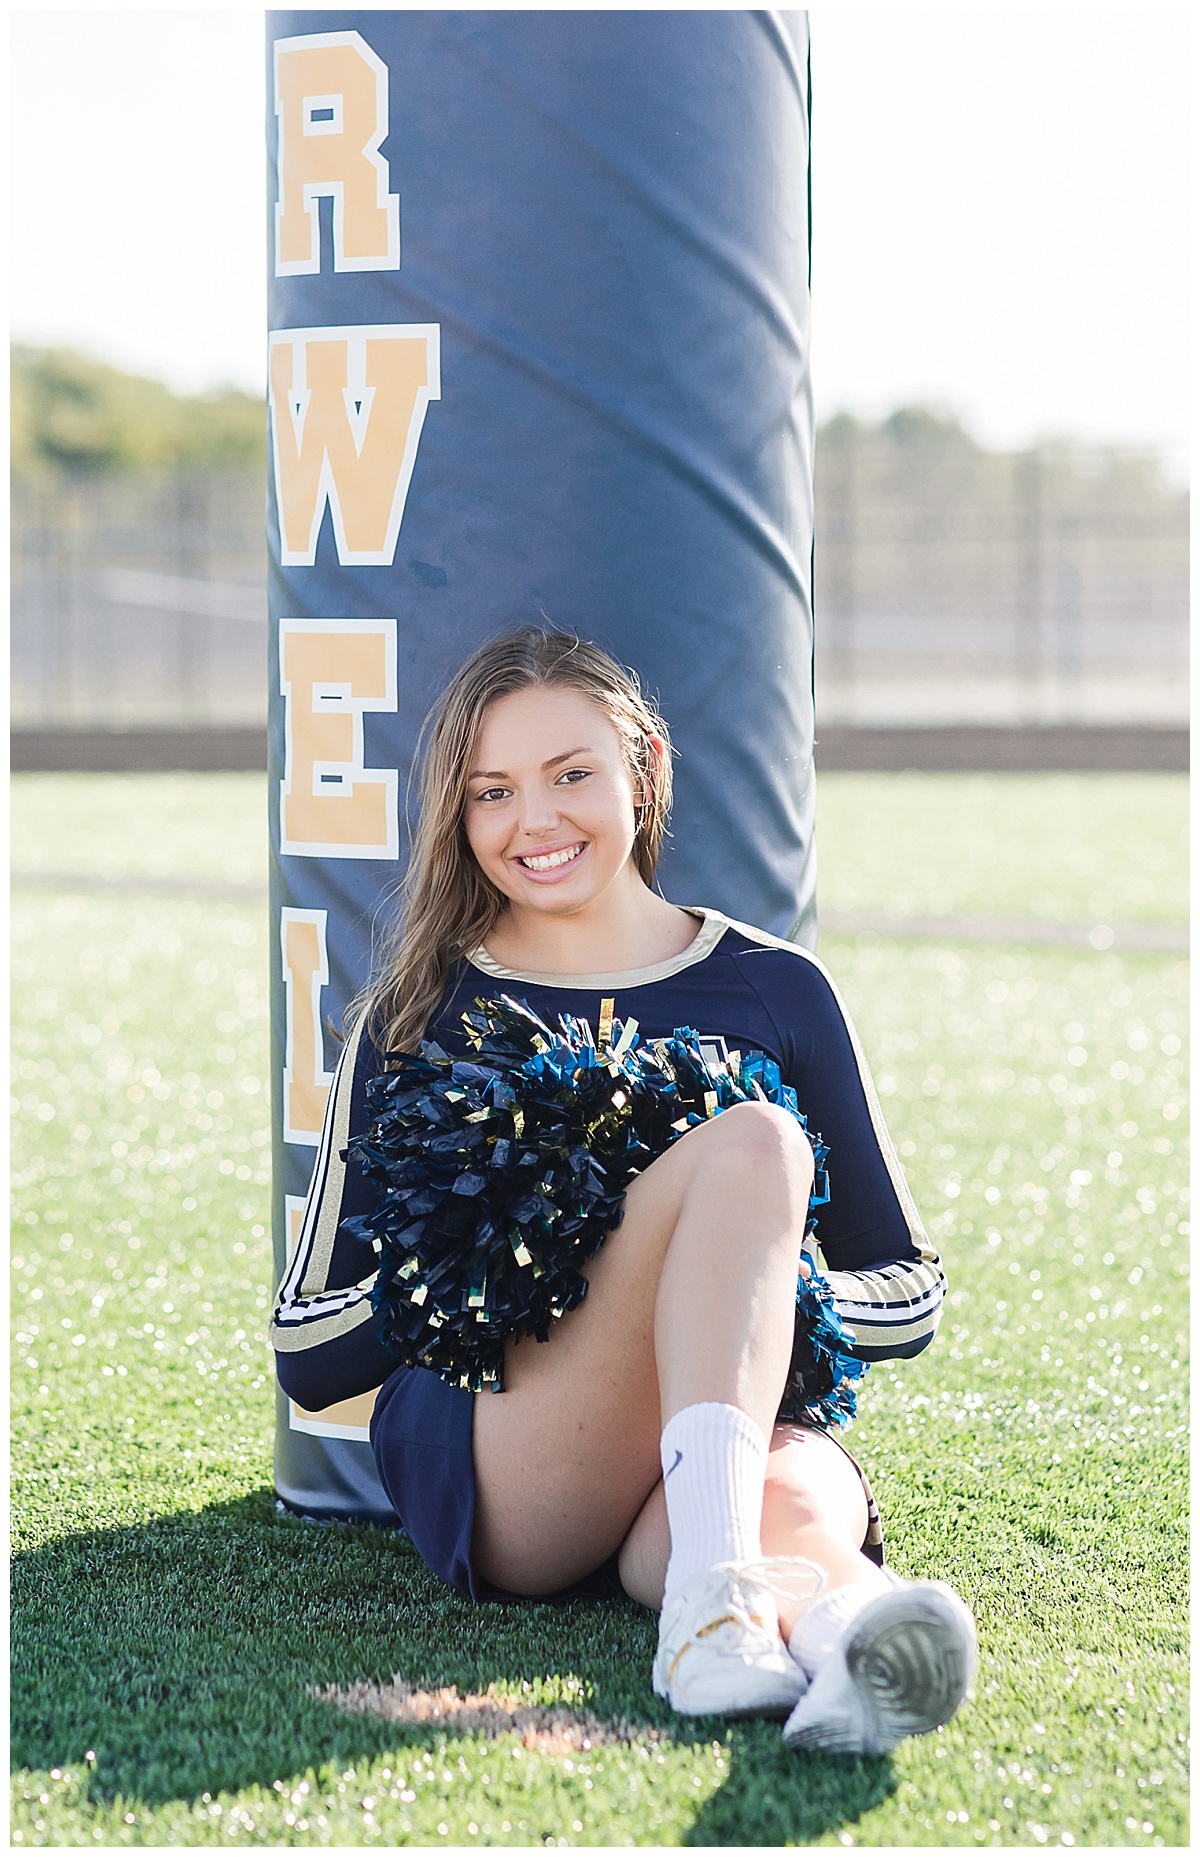 Senior cheerleader on football field photo by Simply Seeking Photography